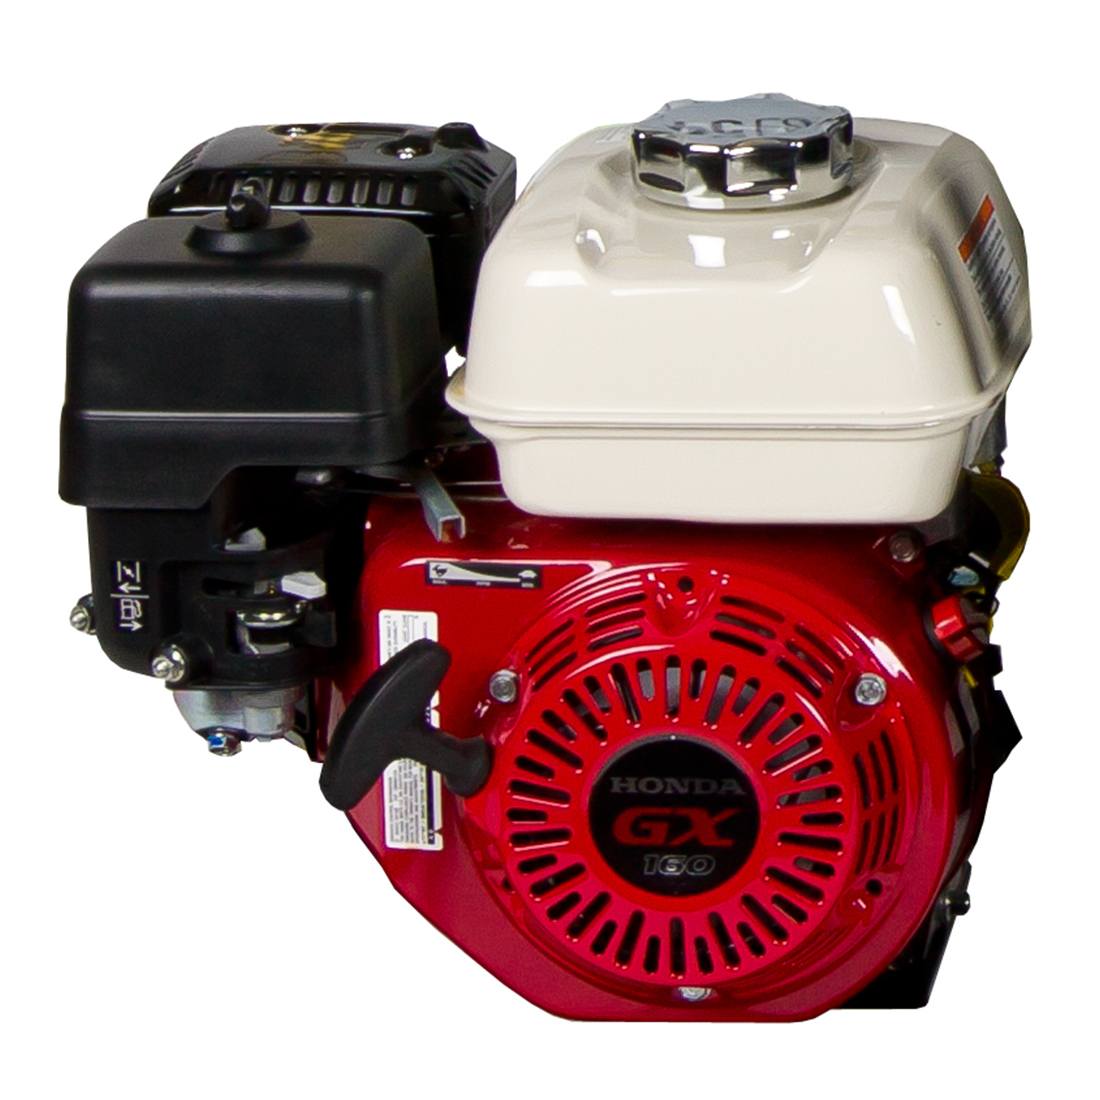 IPC Eagle Motor for RO/DI - Main Product View